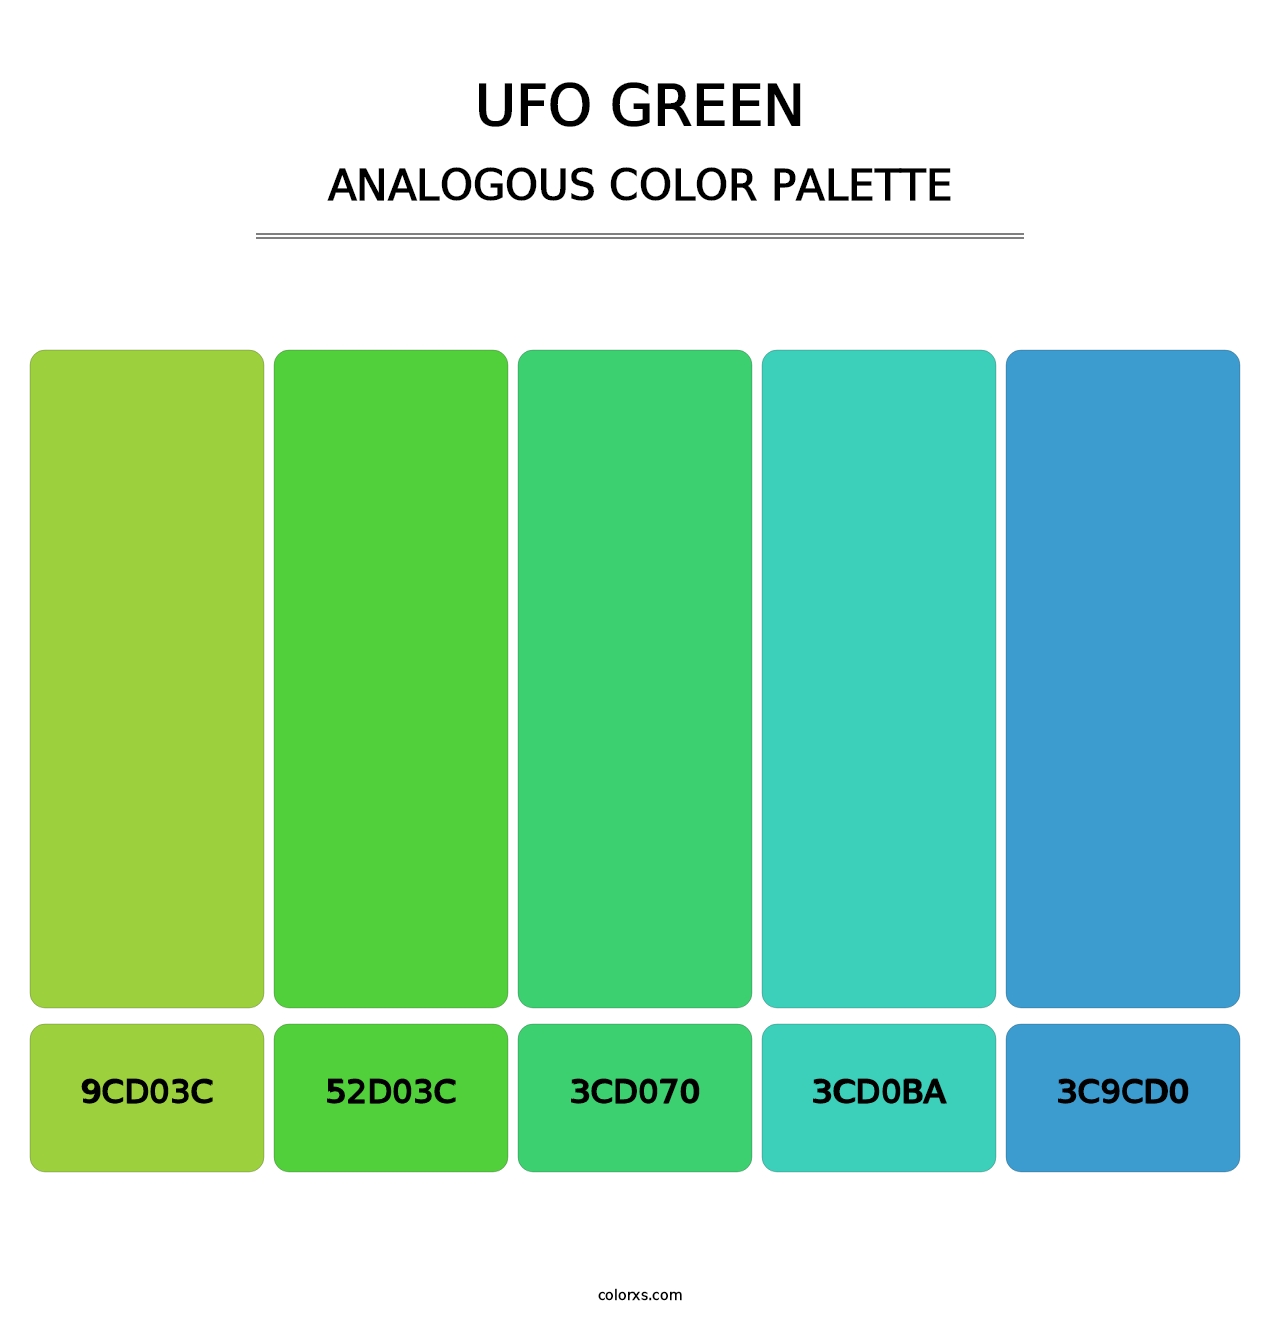 UFO Green - Analogous Color Palette